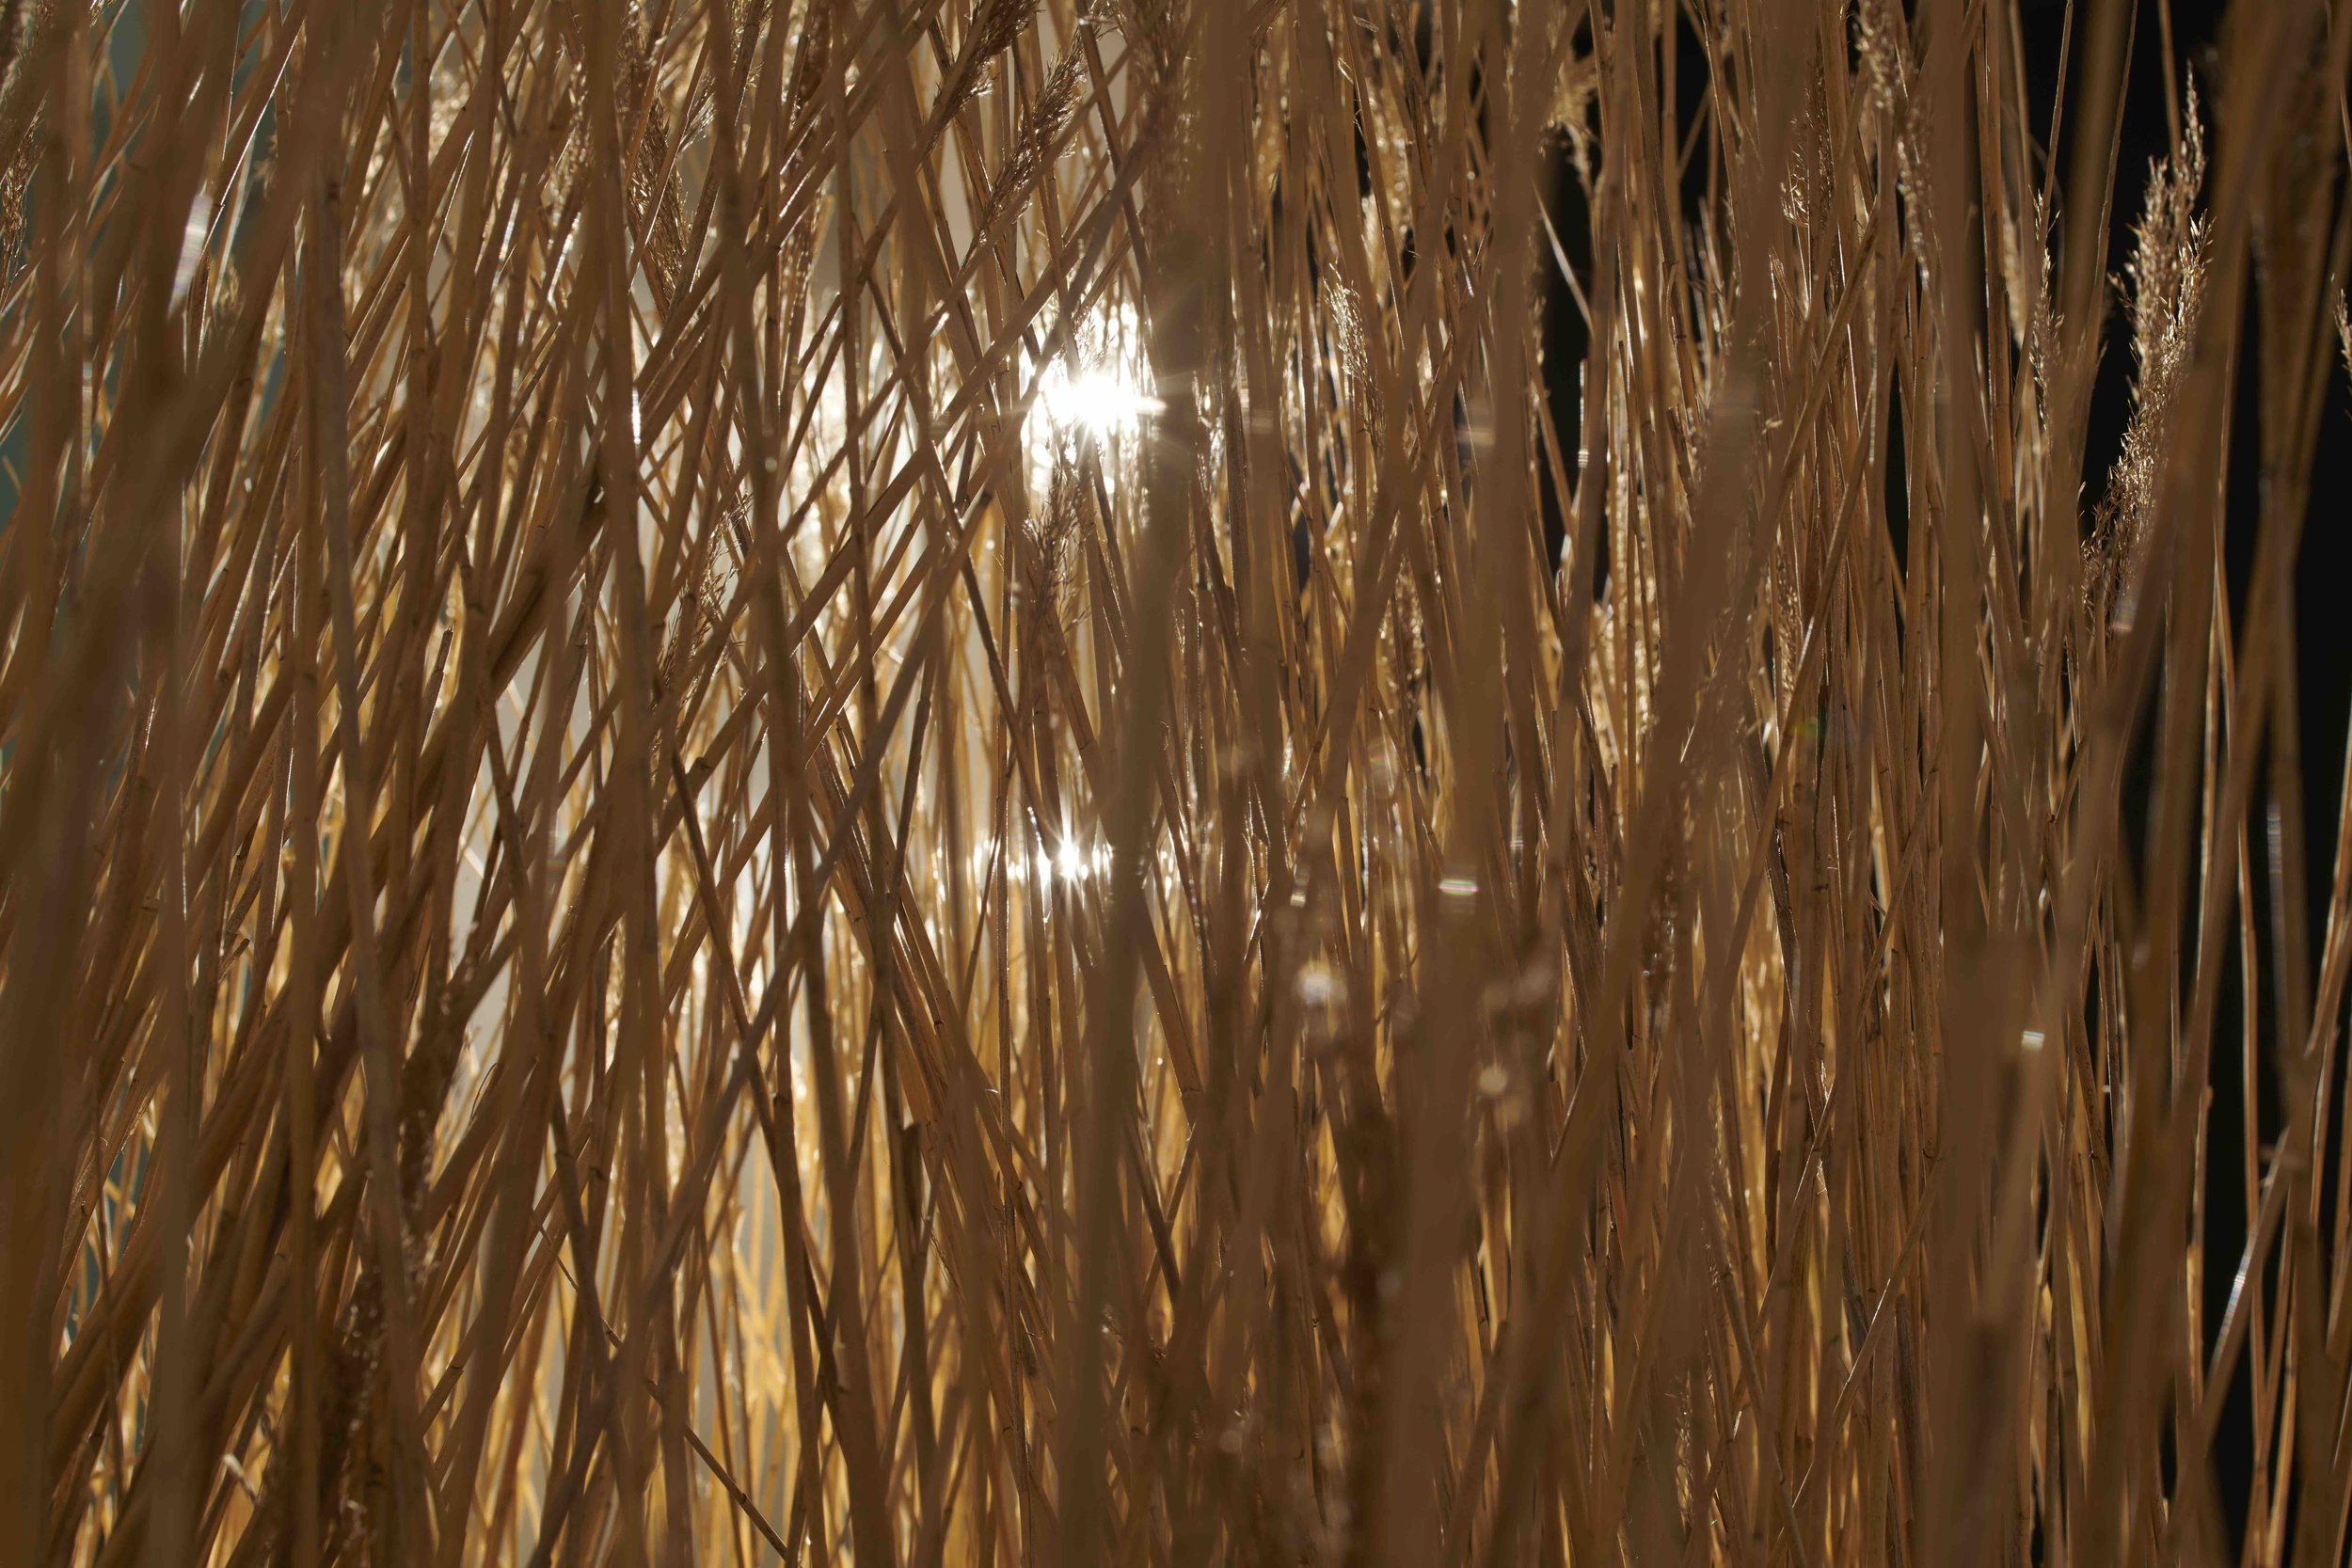 Lilith Carpet, reeds detail, image by Sylvain Deleu size.jpg